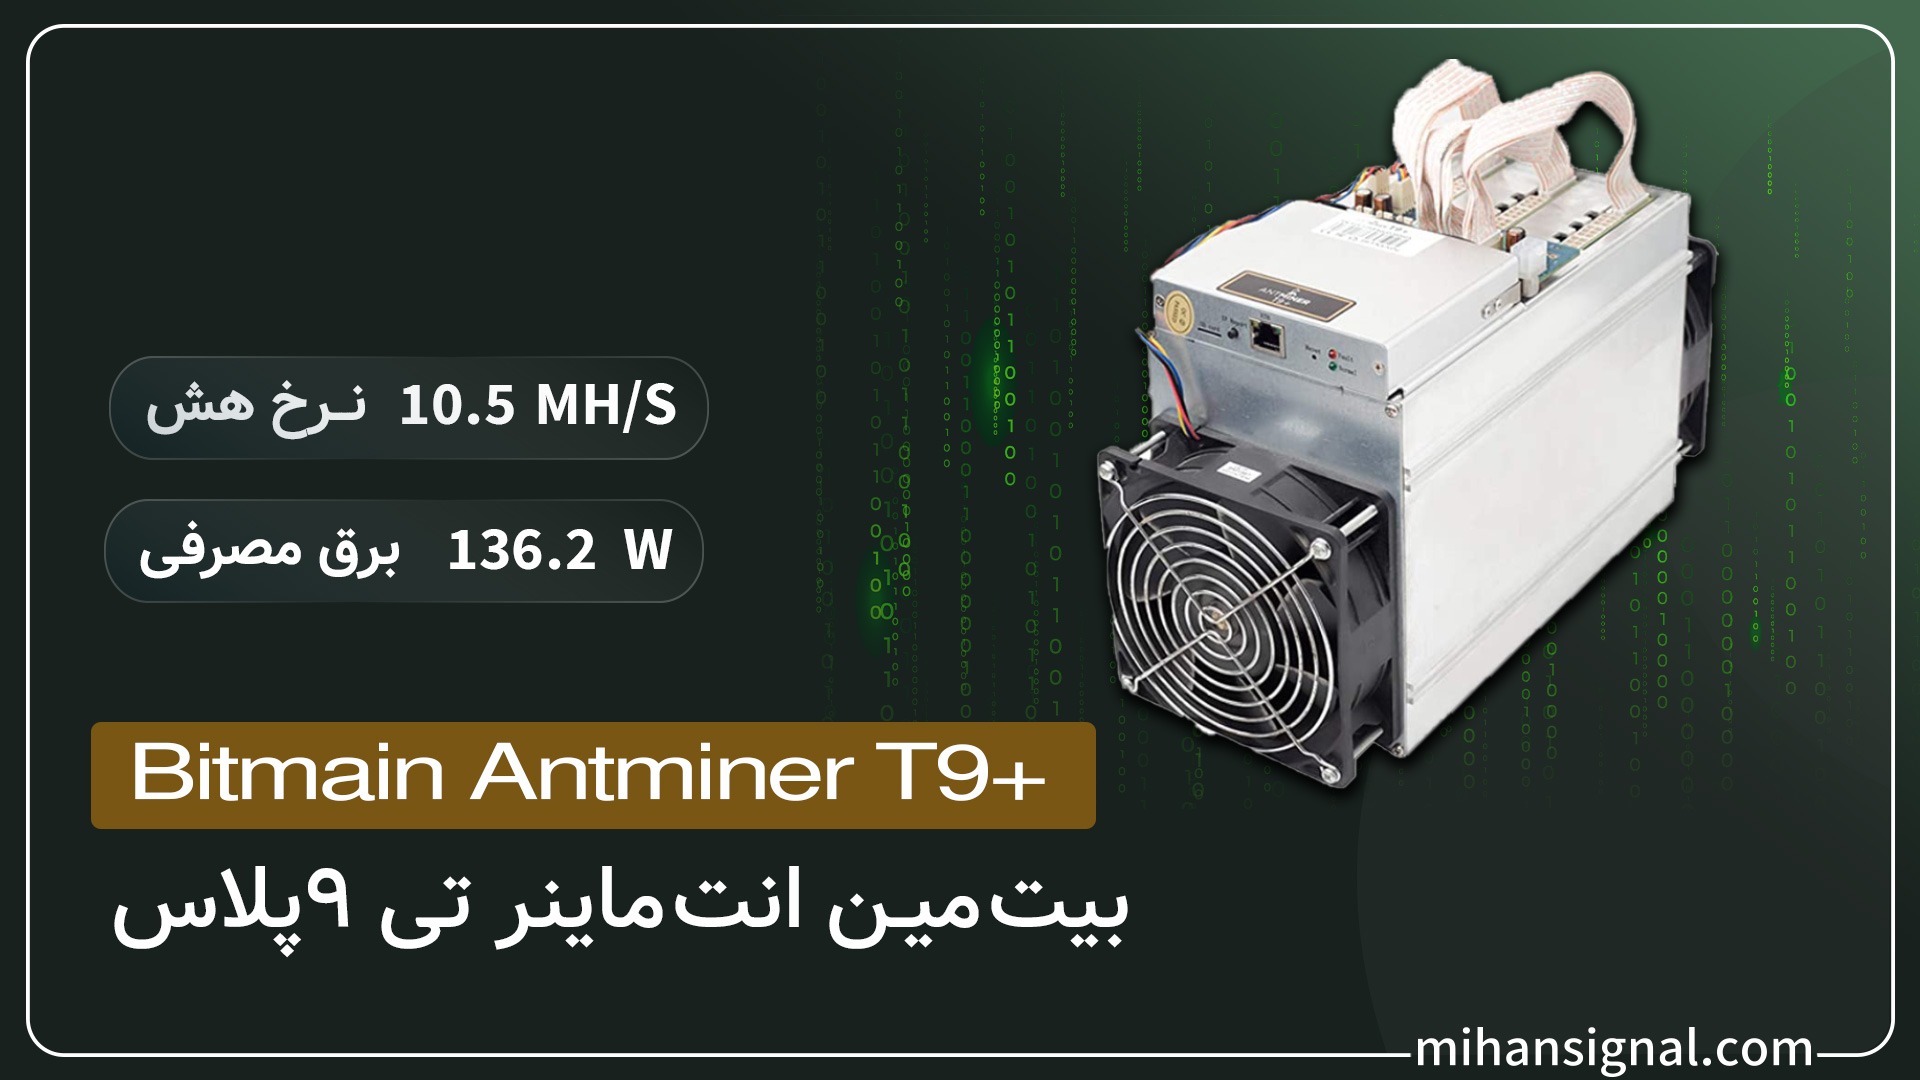 دستگاه بیت مین انت ماینر تی 9+(Bitmain Antminer T9+)